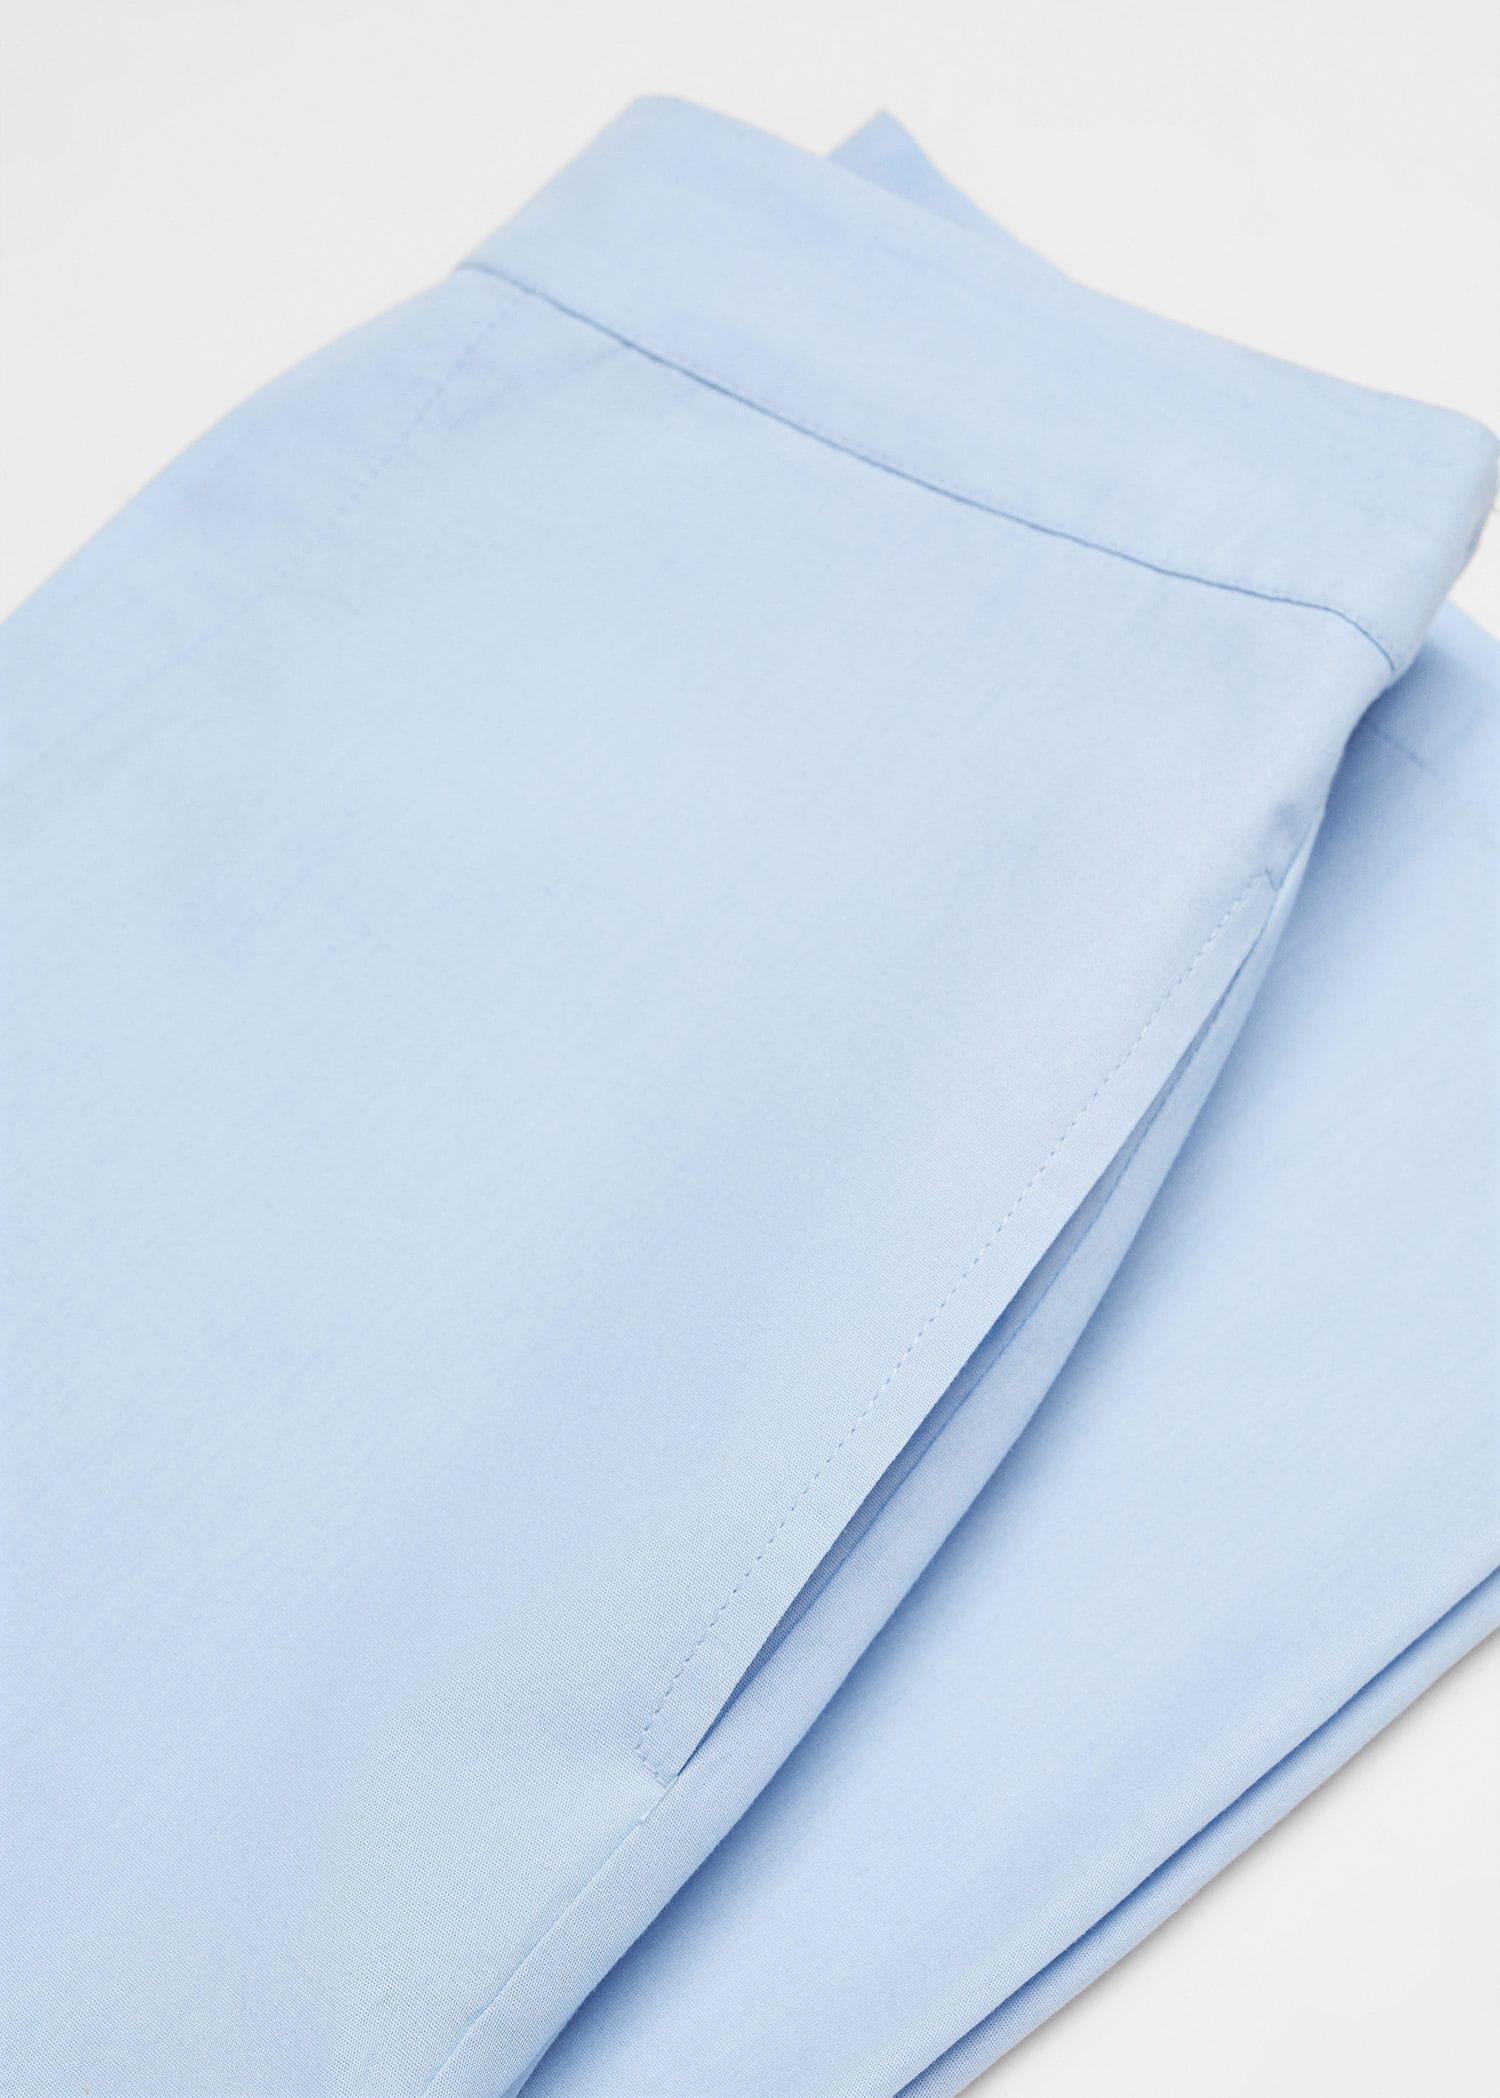 Mango - Blue Cotton Culotte Trousers, Kids Girls